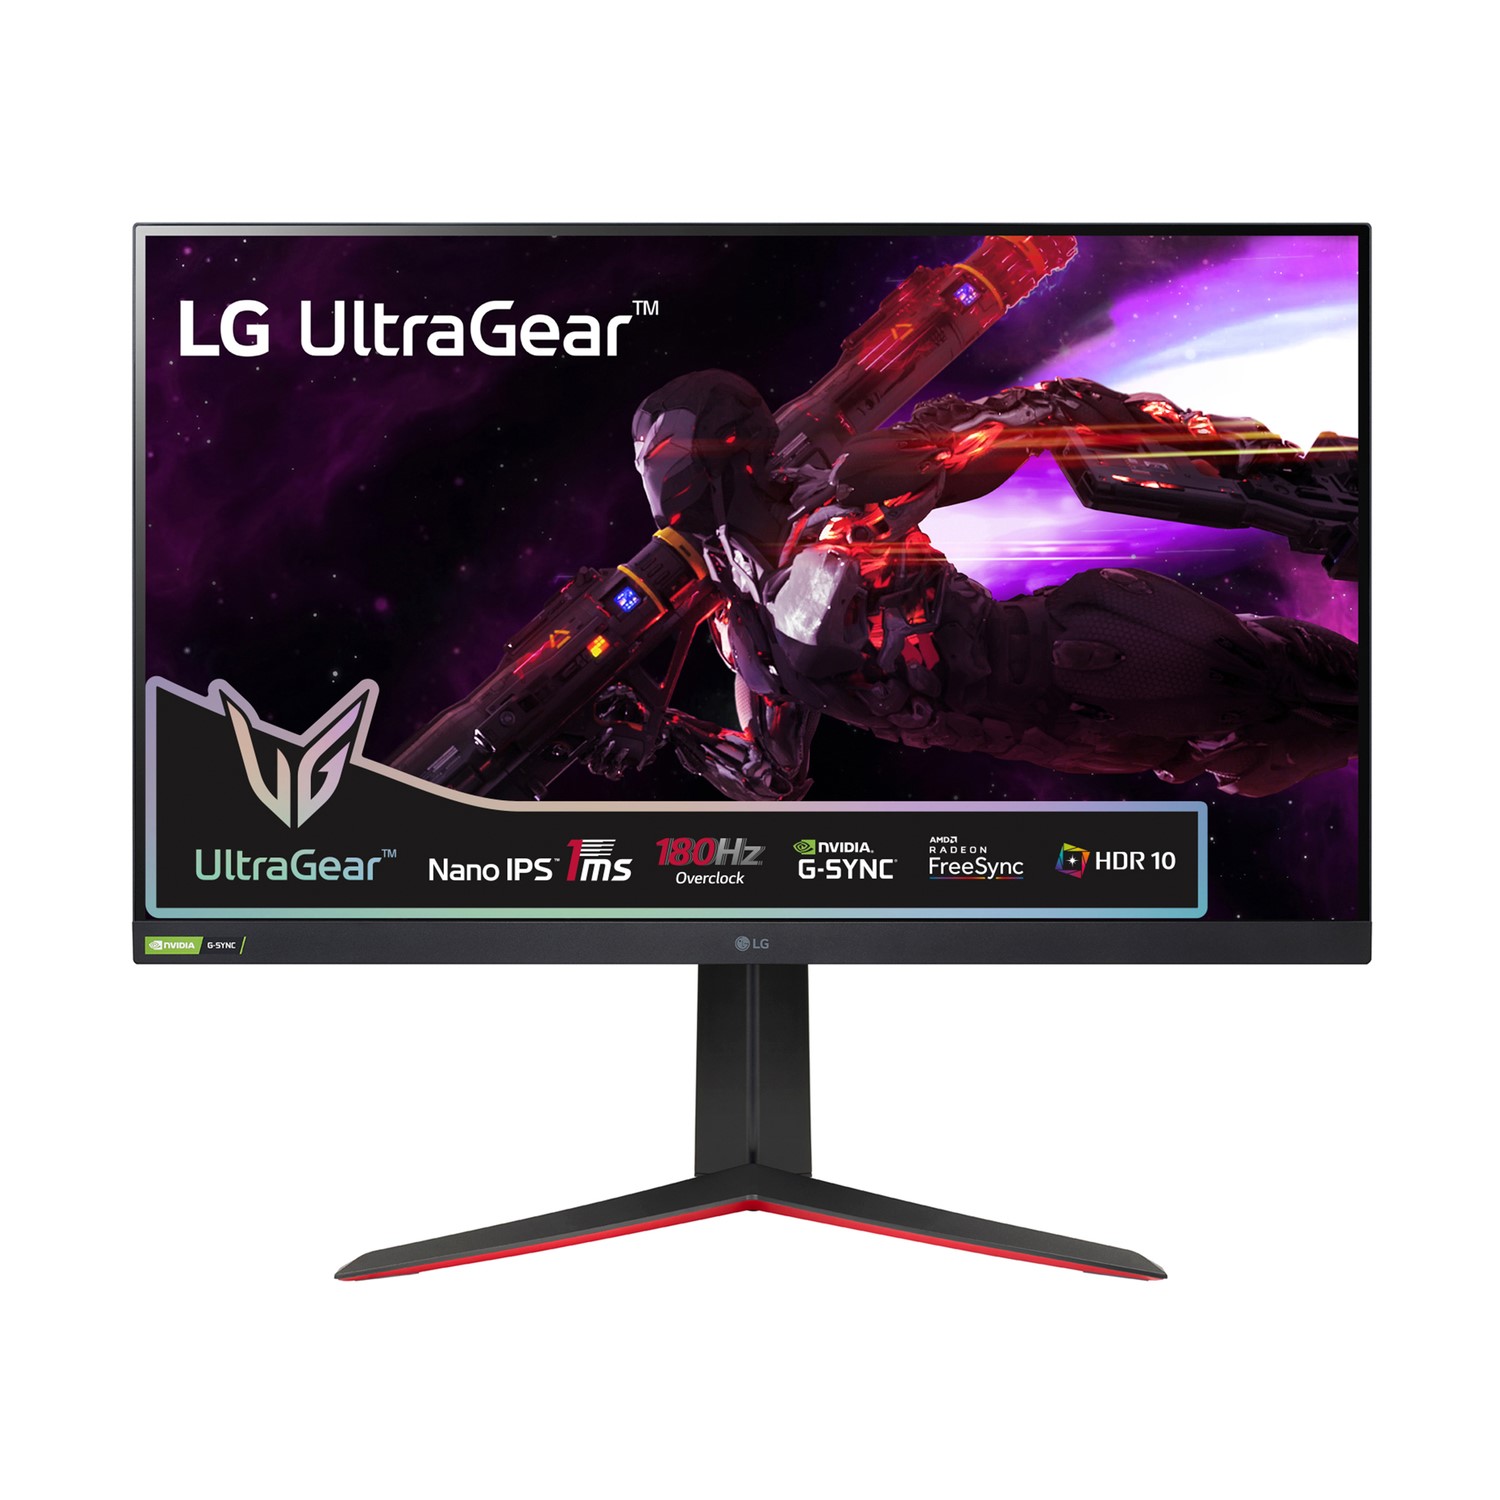 LG UltraGear 32GP850 Quad HD 32" Nano IPS LCD Gaming Monitor - Black, Black